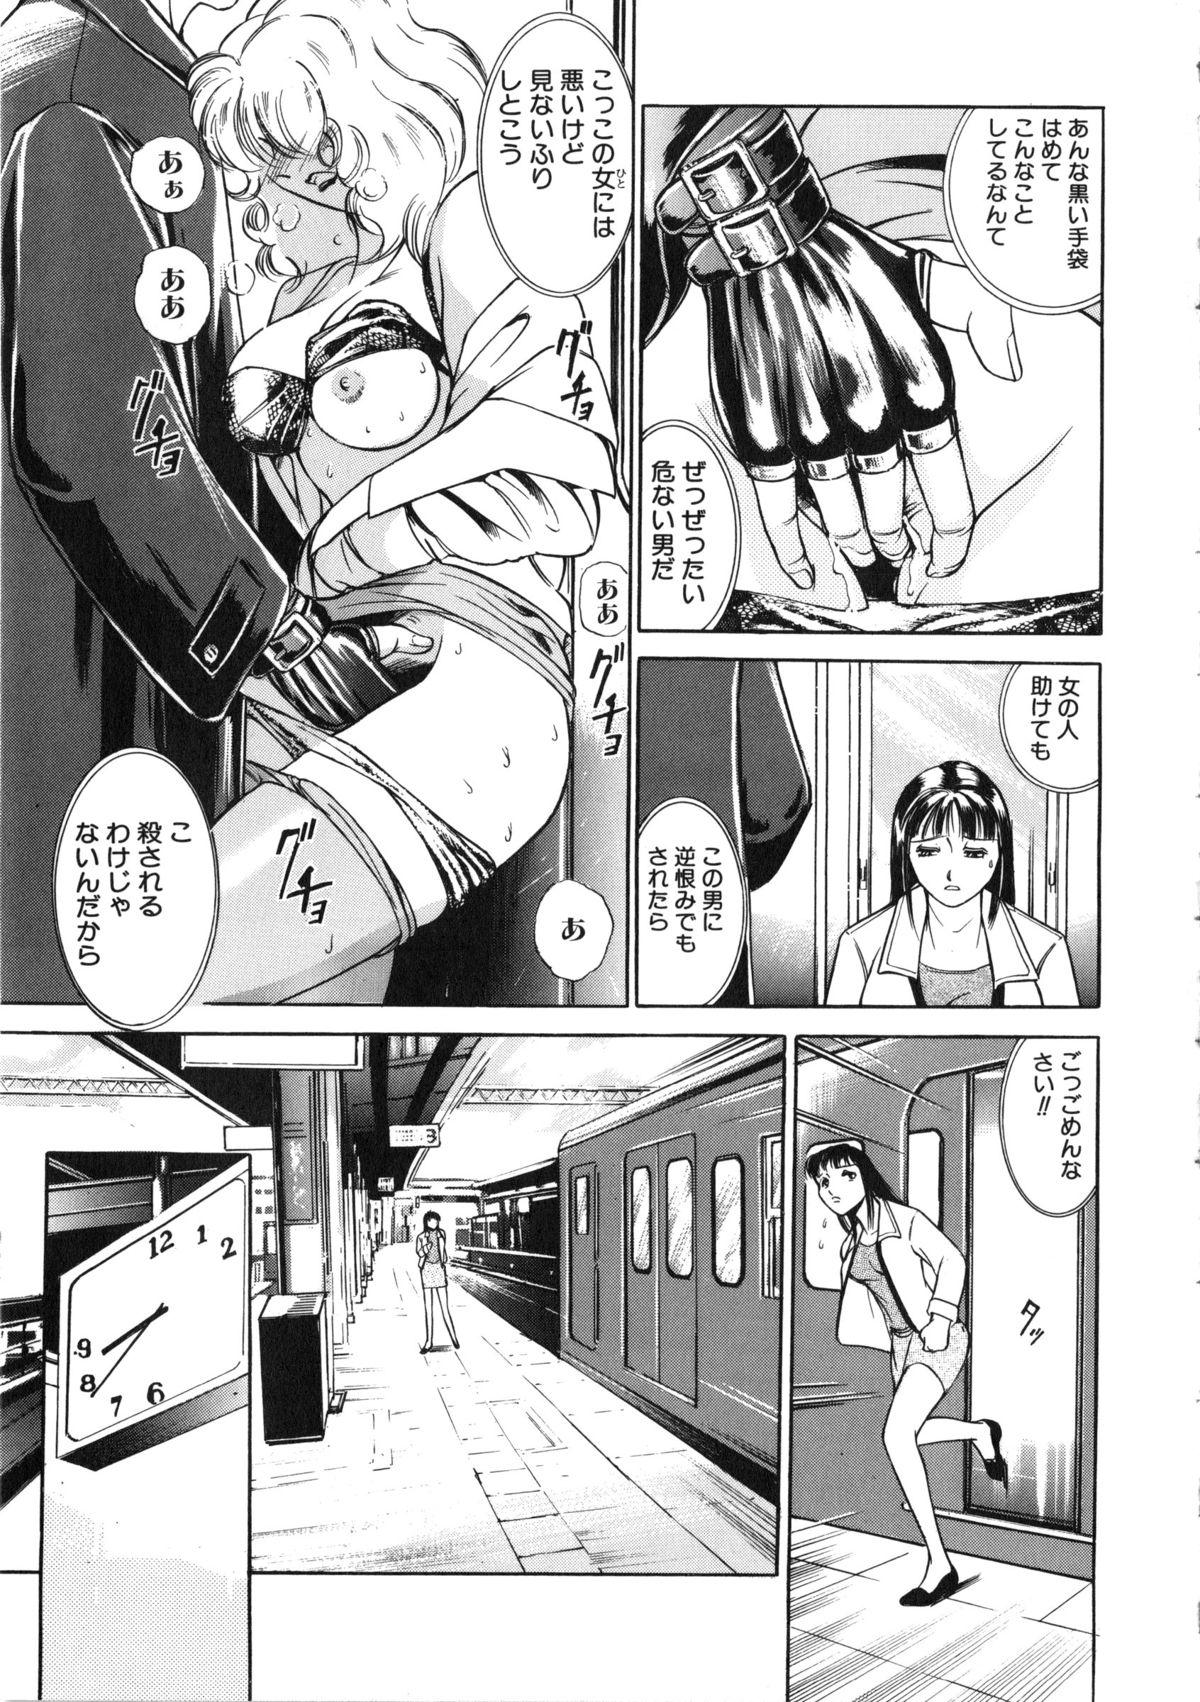 Mulher Sawaru Exposed - Page 8